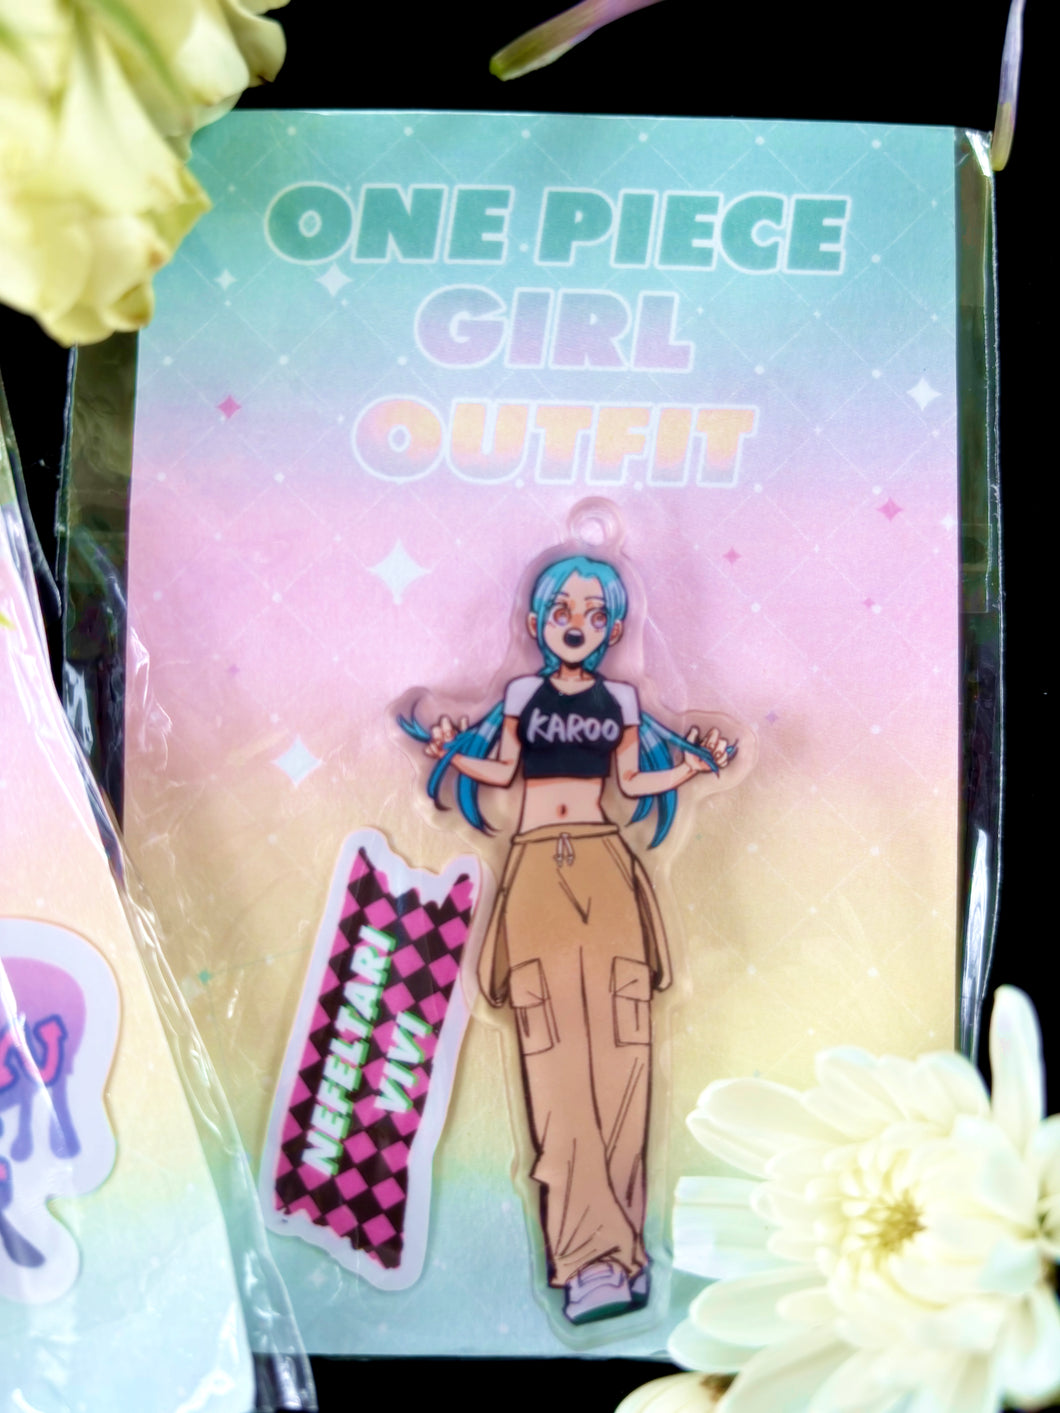 One Piece girl outfit- Vivi